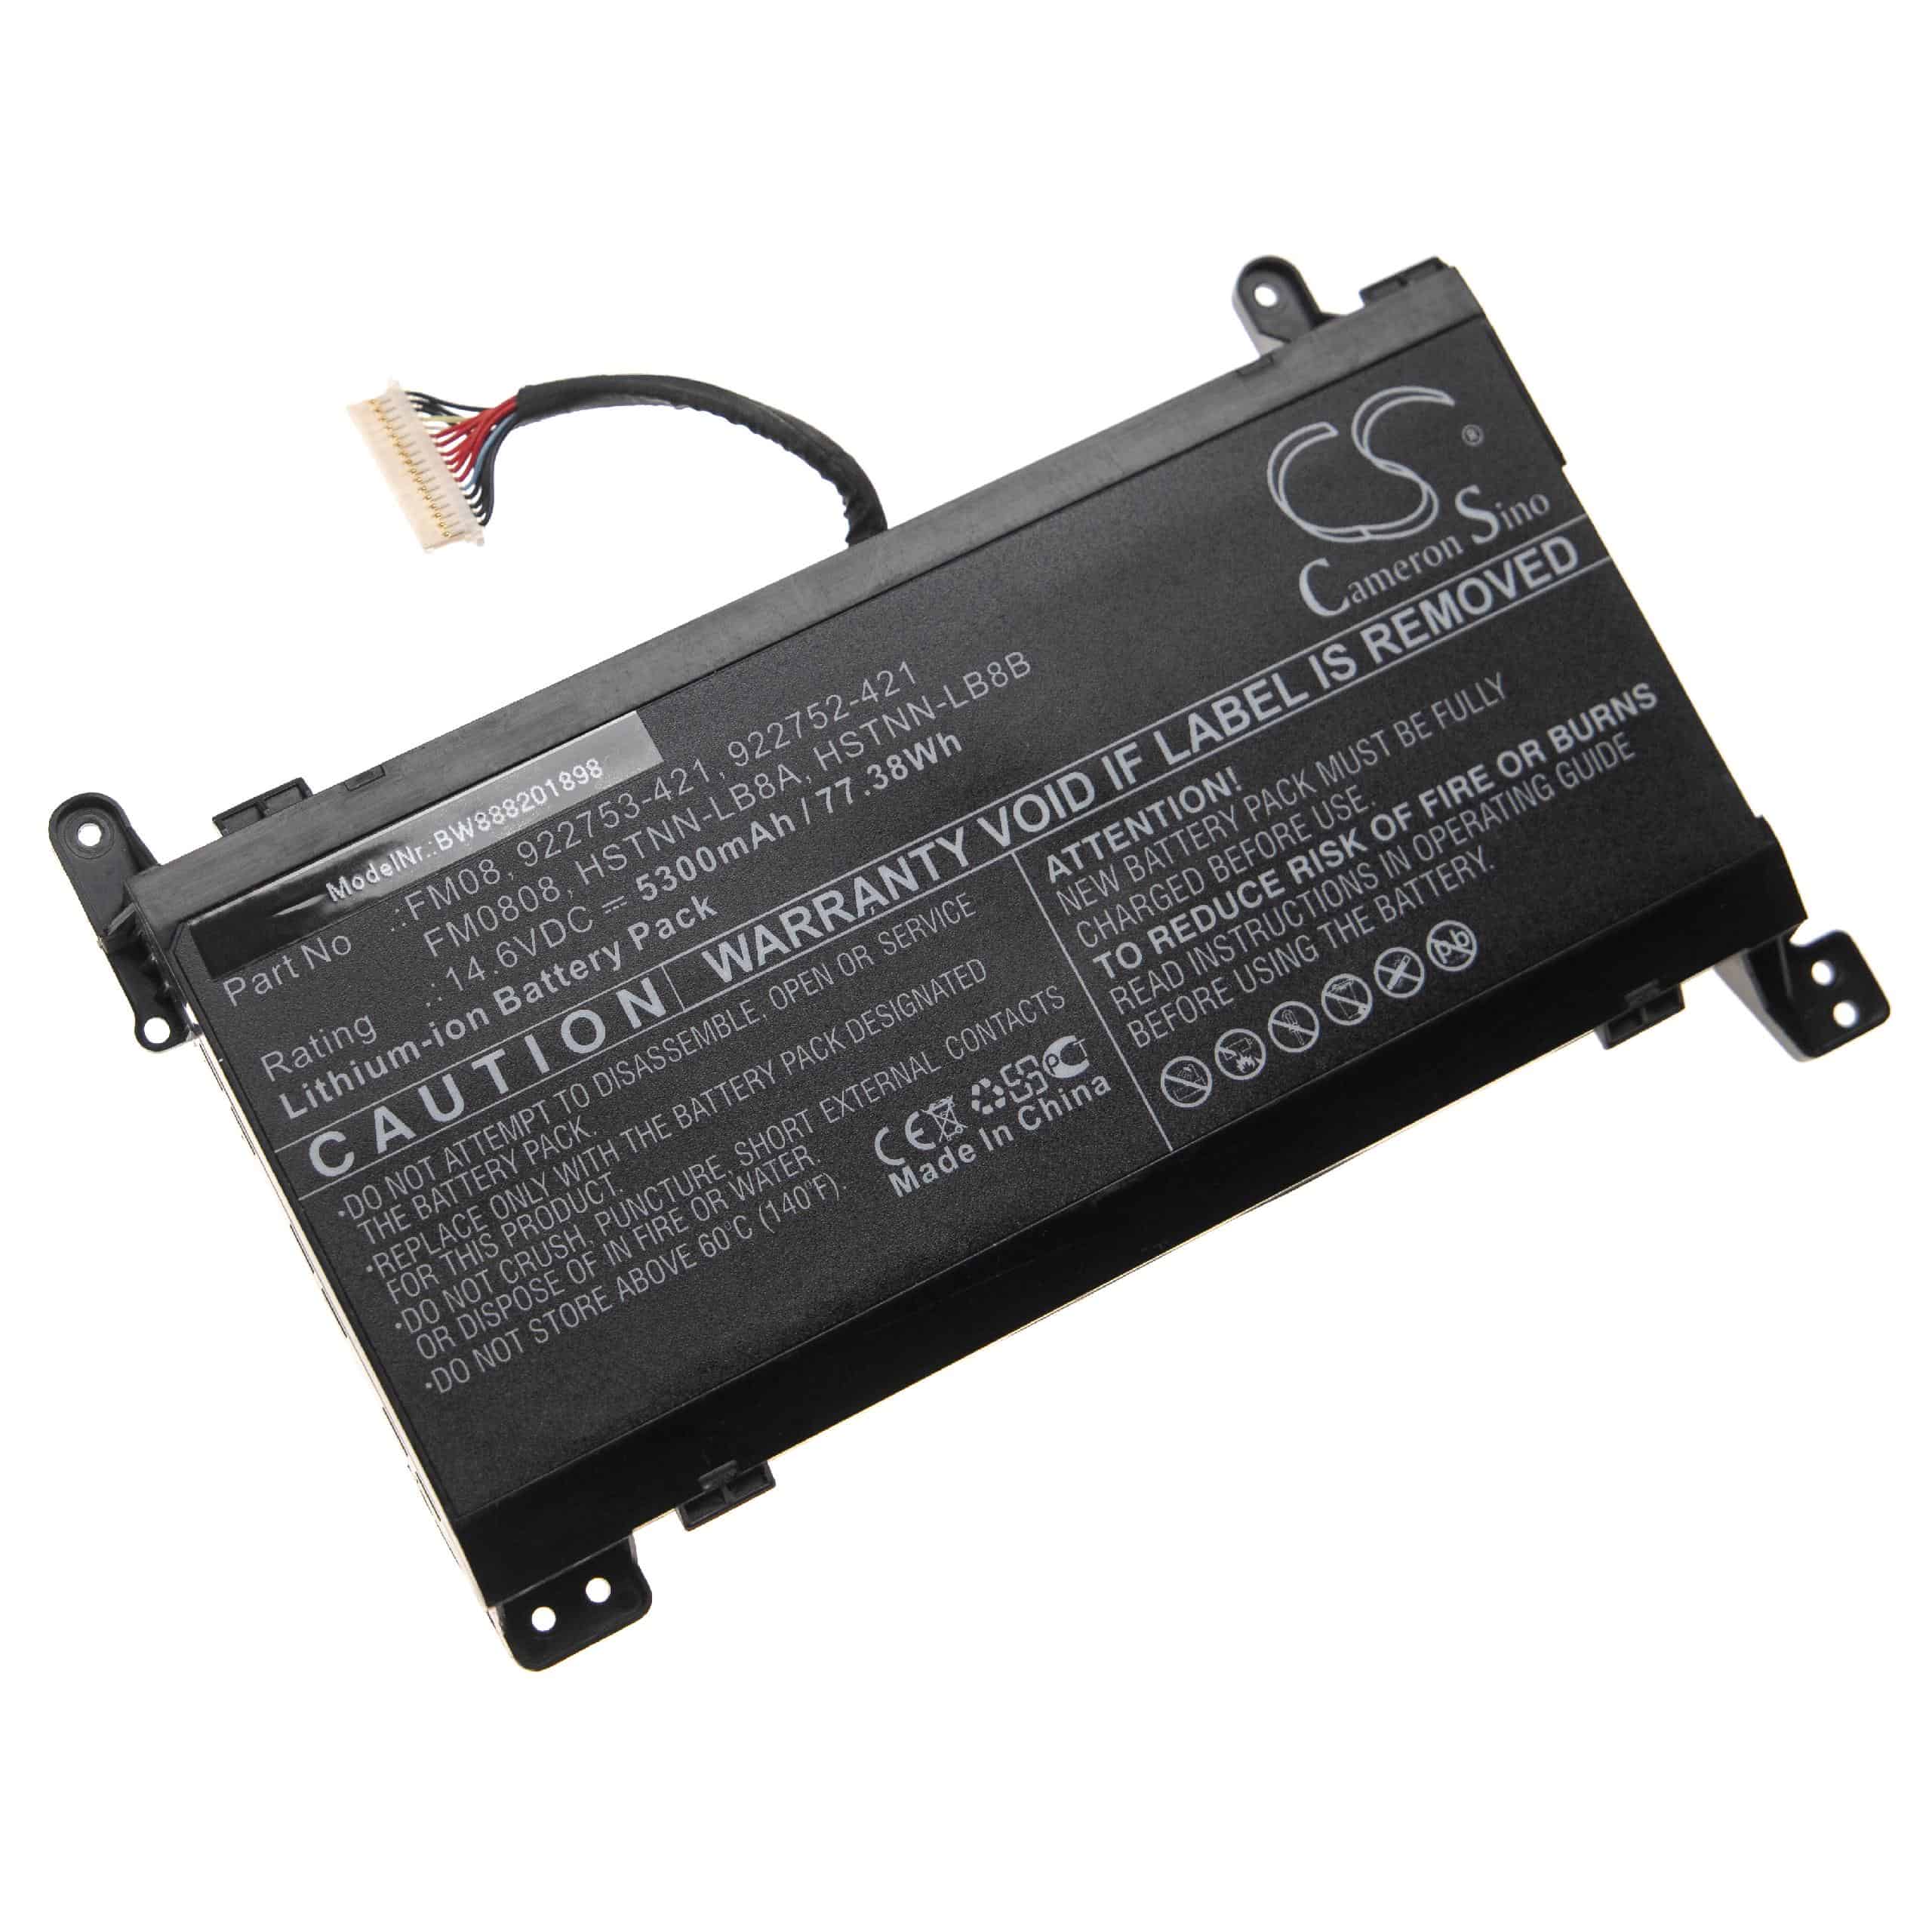 Akumulator do laptopa zamiennik HP 922753-421, 922976-855, FM08, 922752-421 - 5300 mAh 14,6 V Li-Ion, czarny